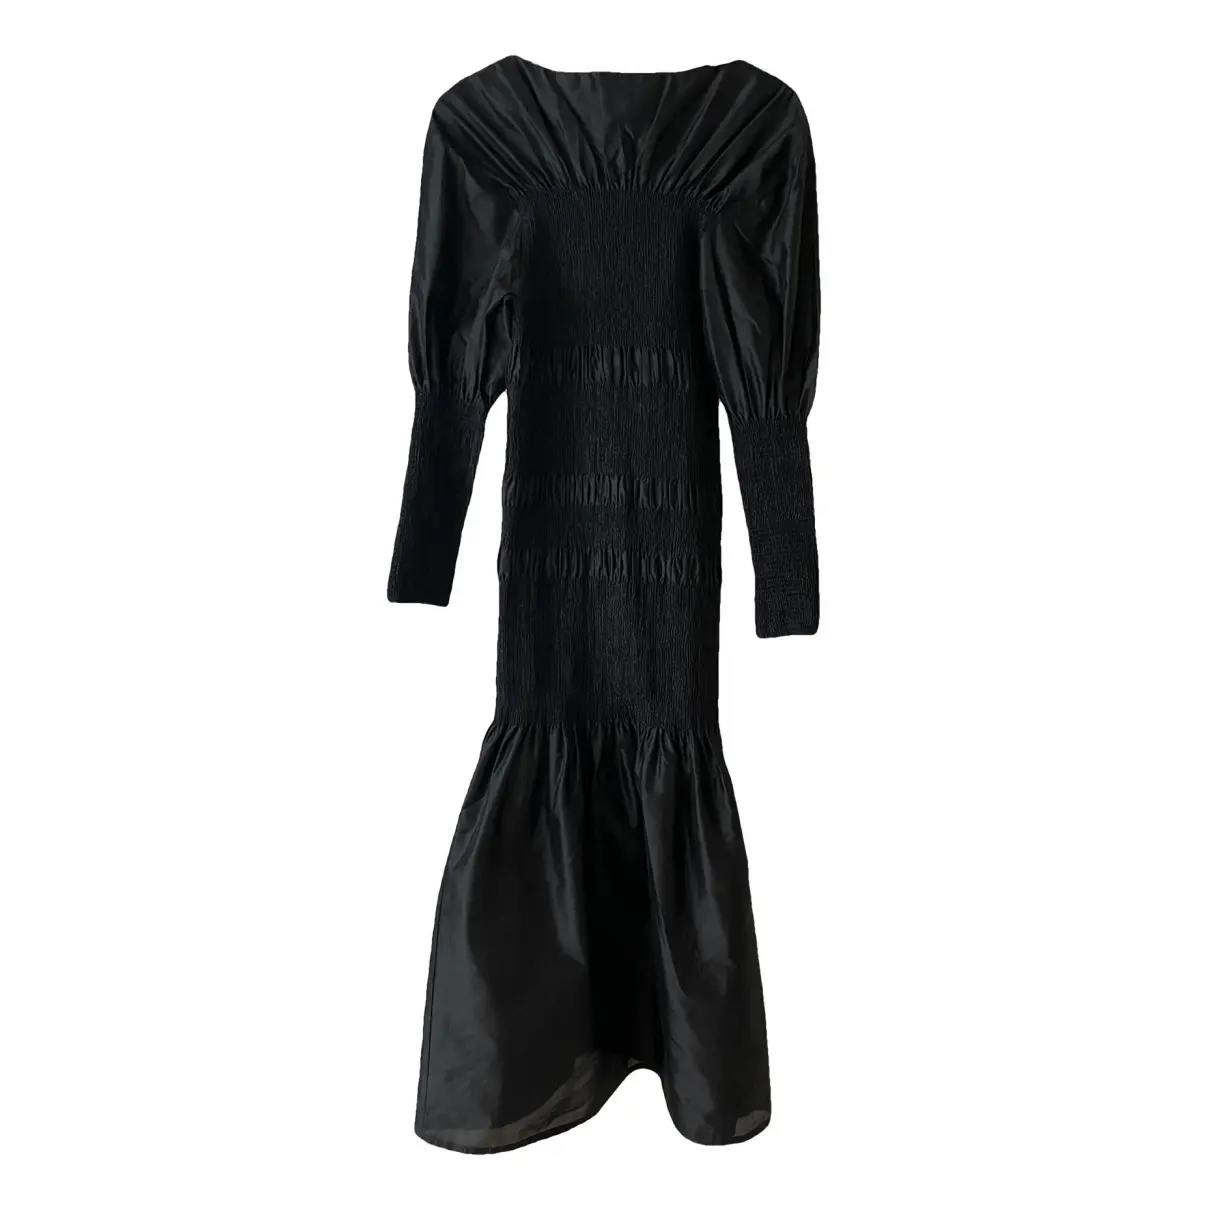 Coripe silk mid-length dress